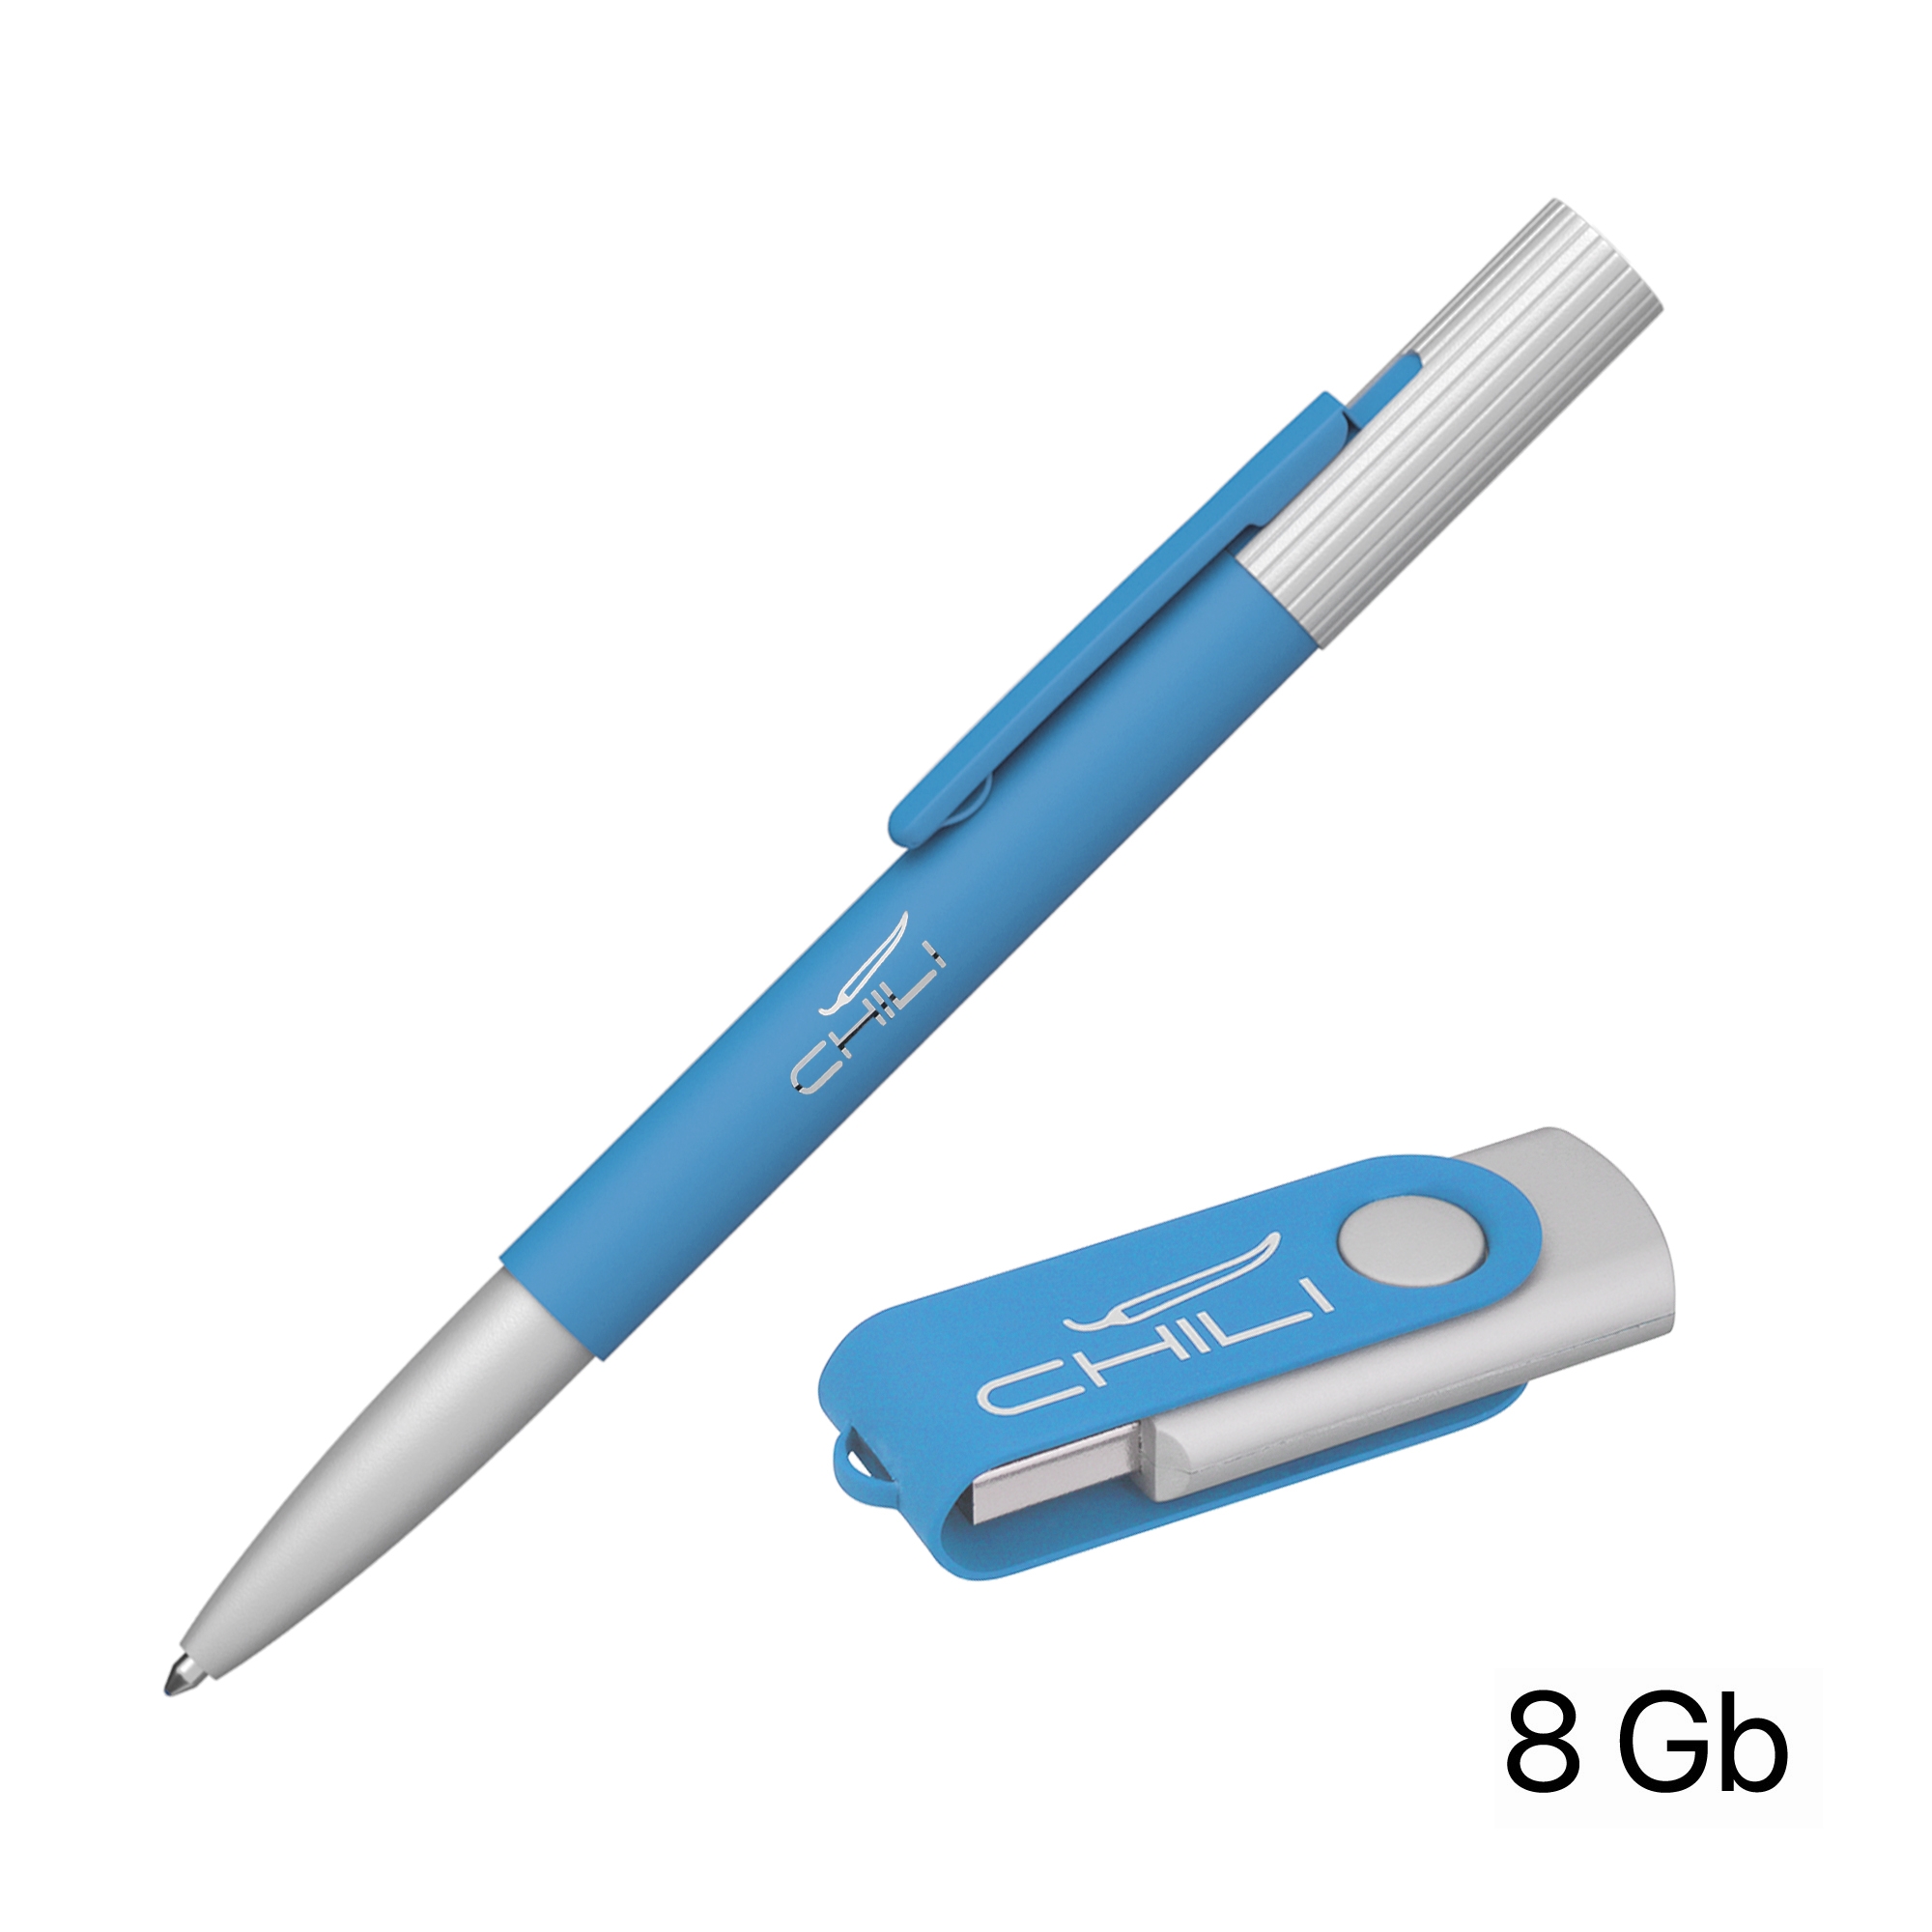 Набор ручка "Clas" + флеш-карта "Vostok" 8 Гб в футляре, покрытие soft touch, голубой, металл/пластик/soft touch